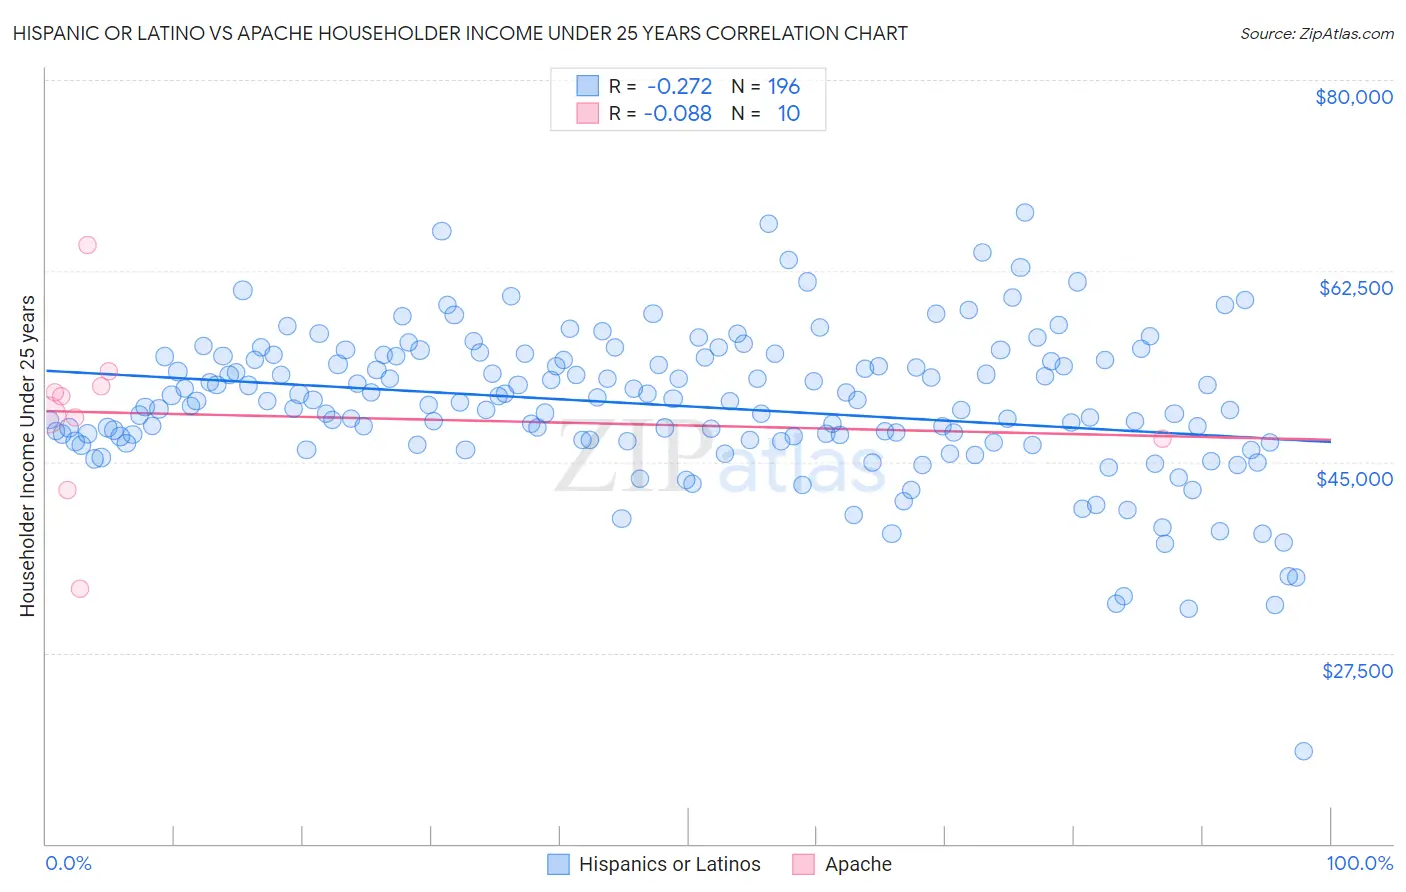 Hispanic or Latino vs Apache Householder Income Under 25 years